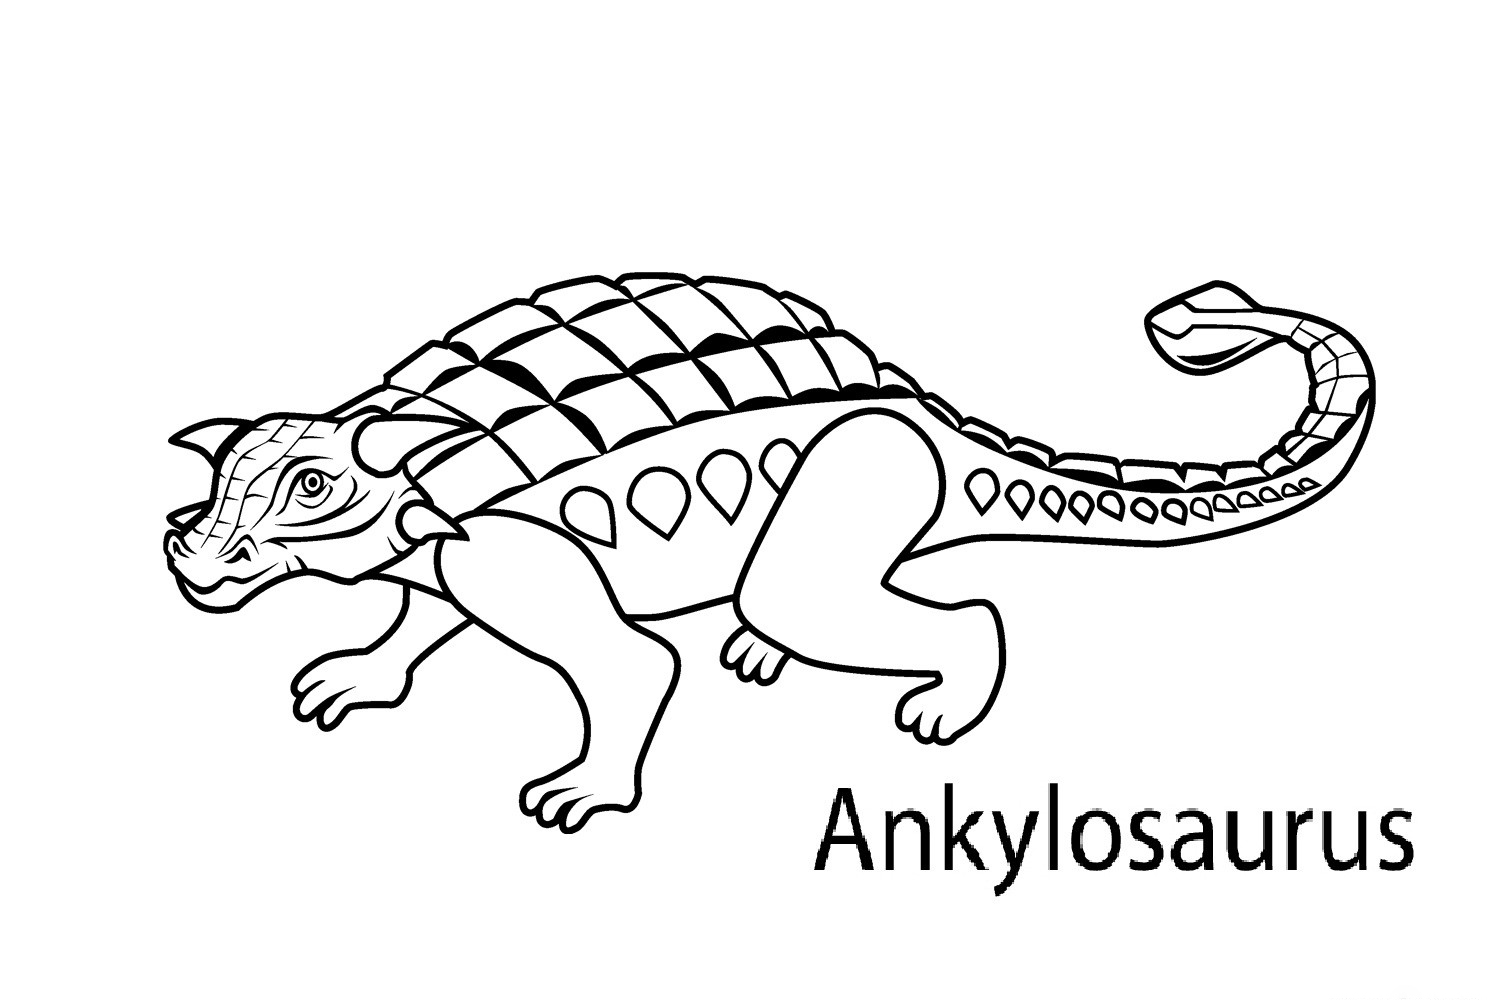 Ankylosaurus is a genus of armored dinosaur. Coloring Page